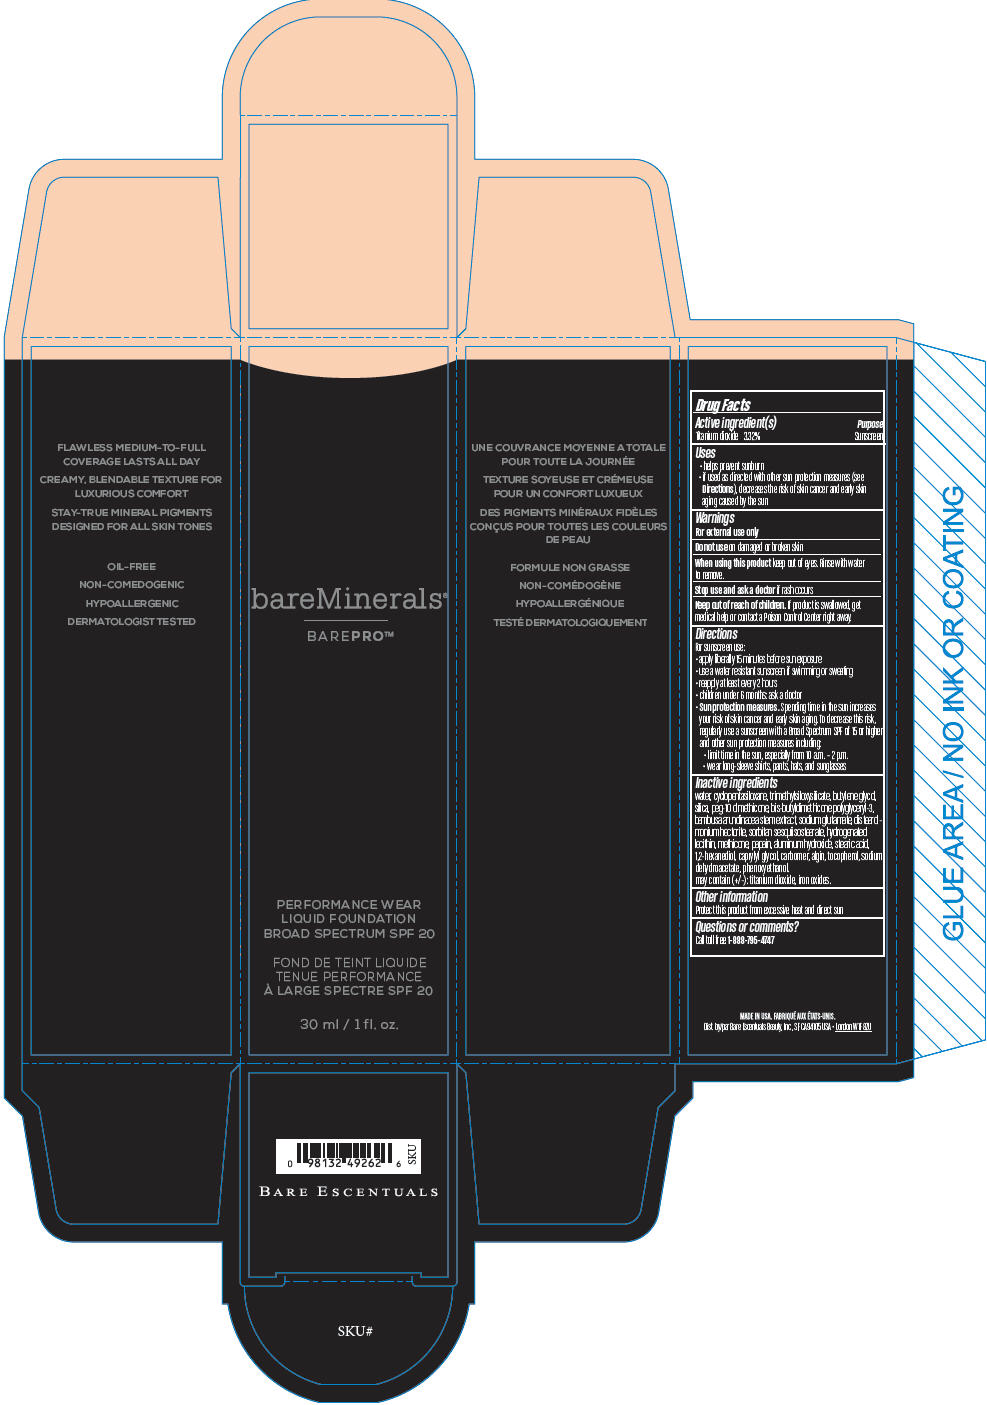 PRINCIPAL DISPLAY PANEL - 30 ml Bottle Carton - Nutmeg 24